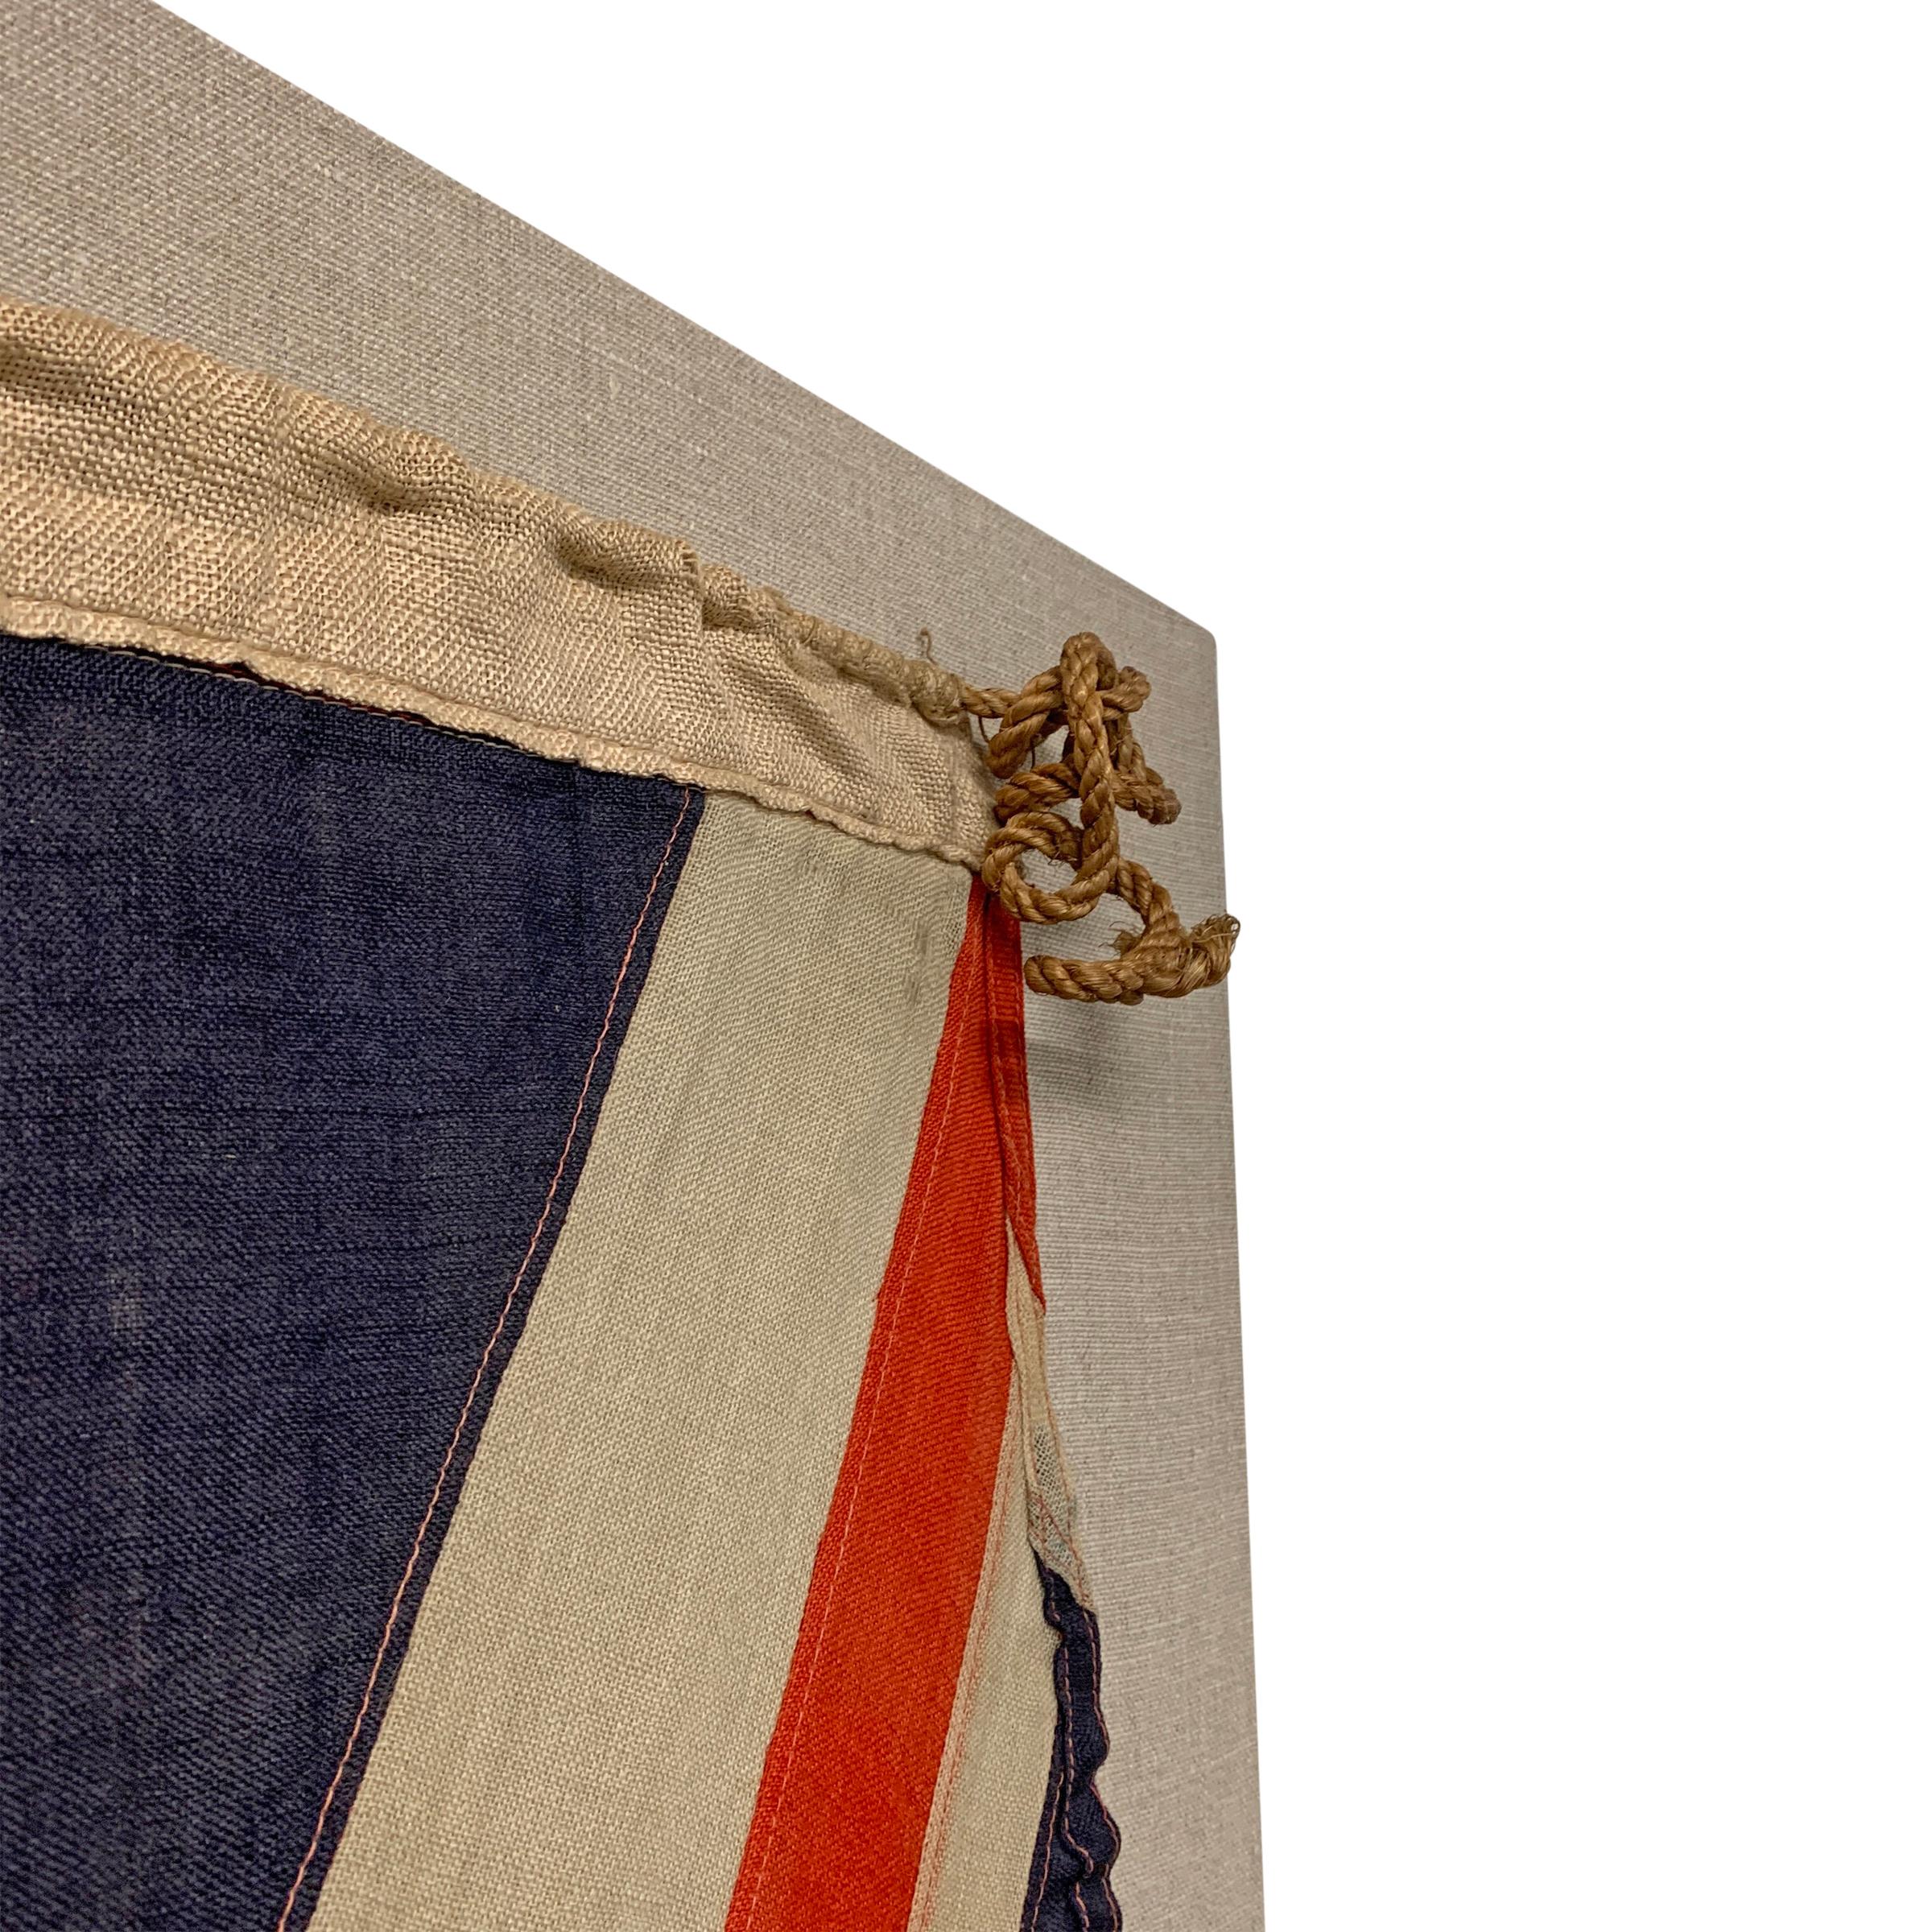 Mounted Vintage British Linen Union Jack Flag 5